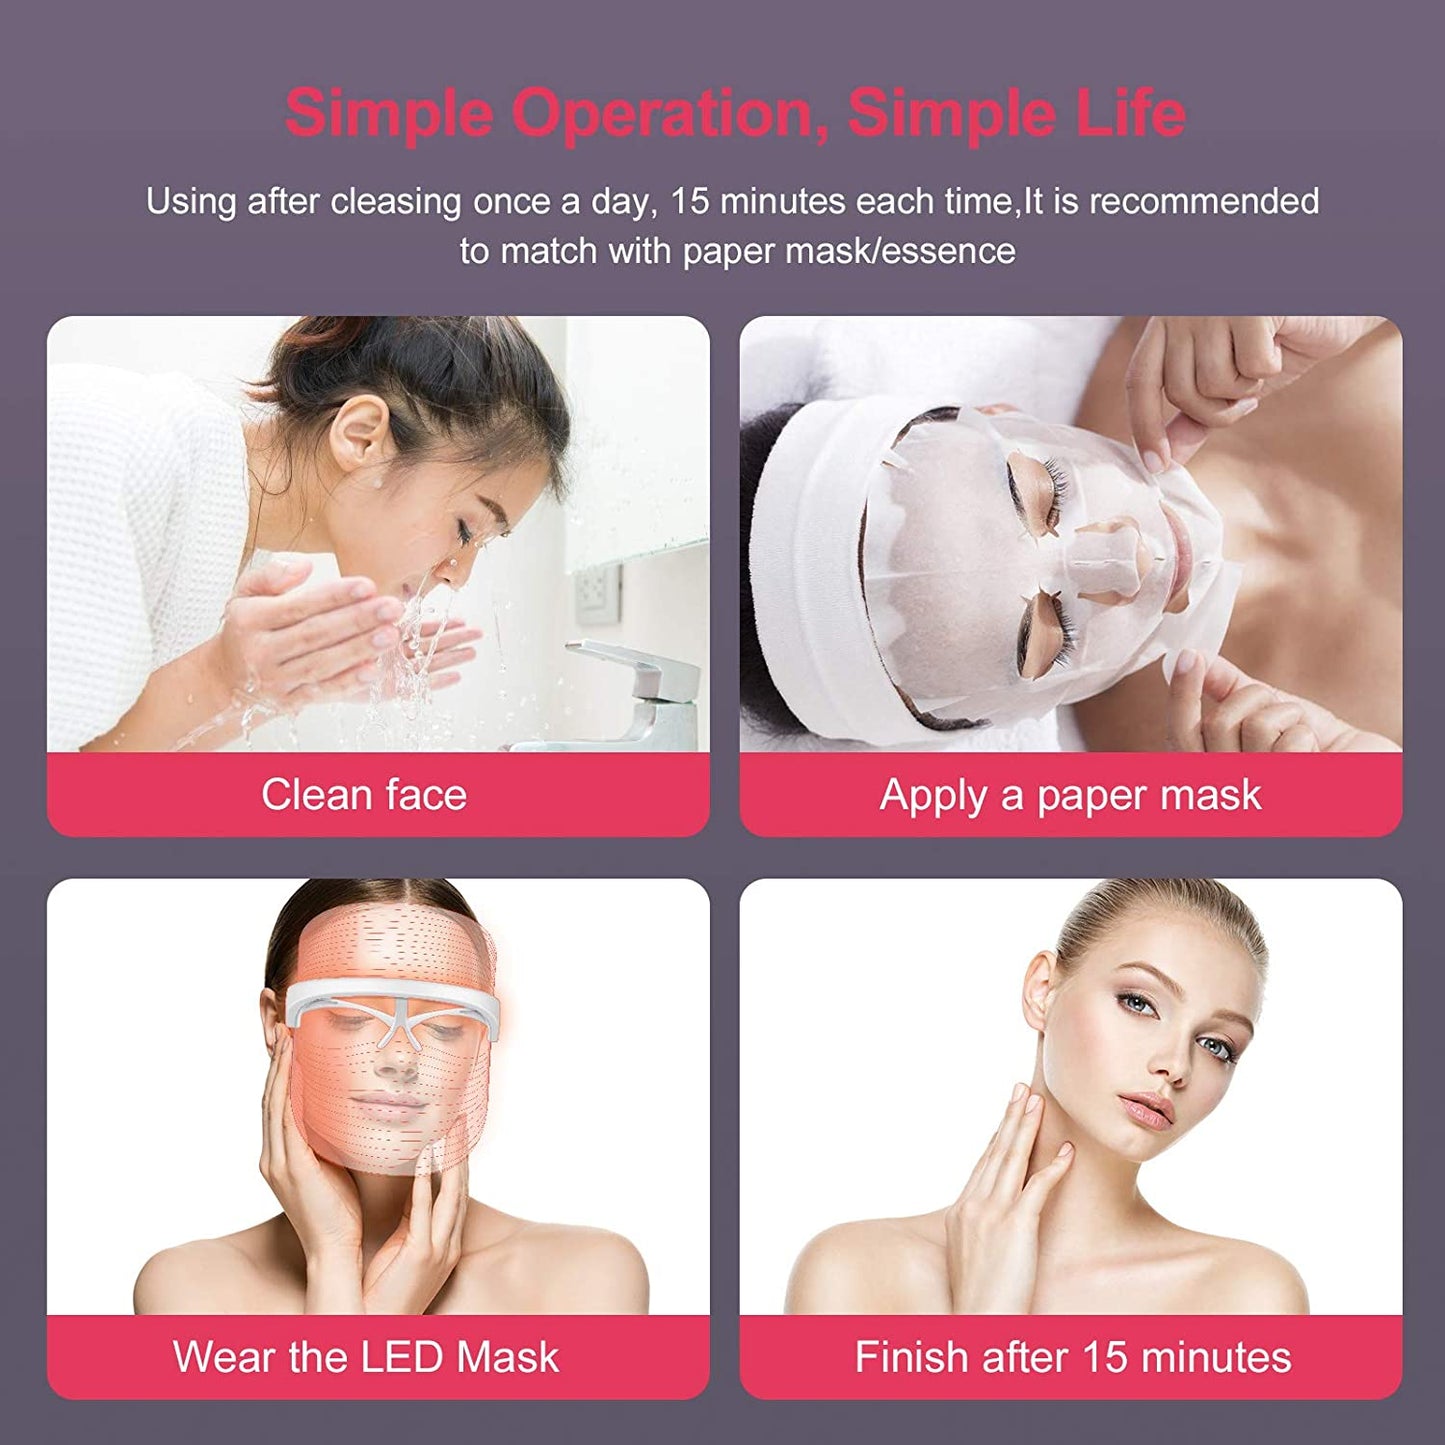 The Photon LED Light Facial Mask Skin Care